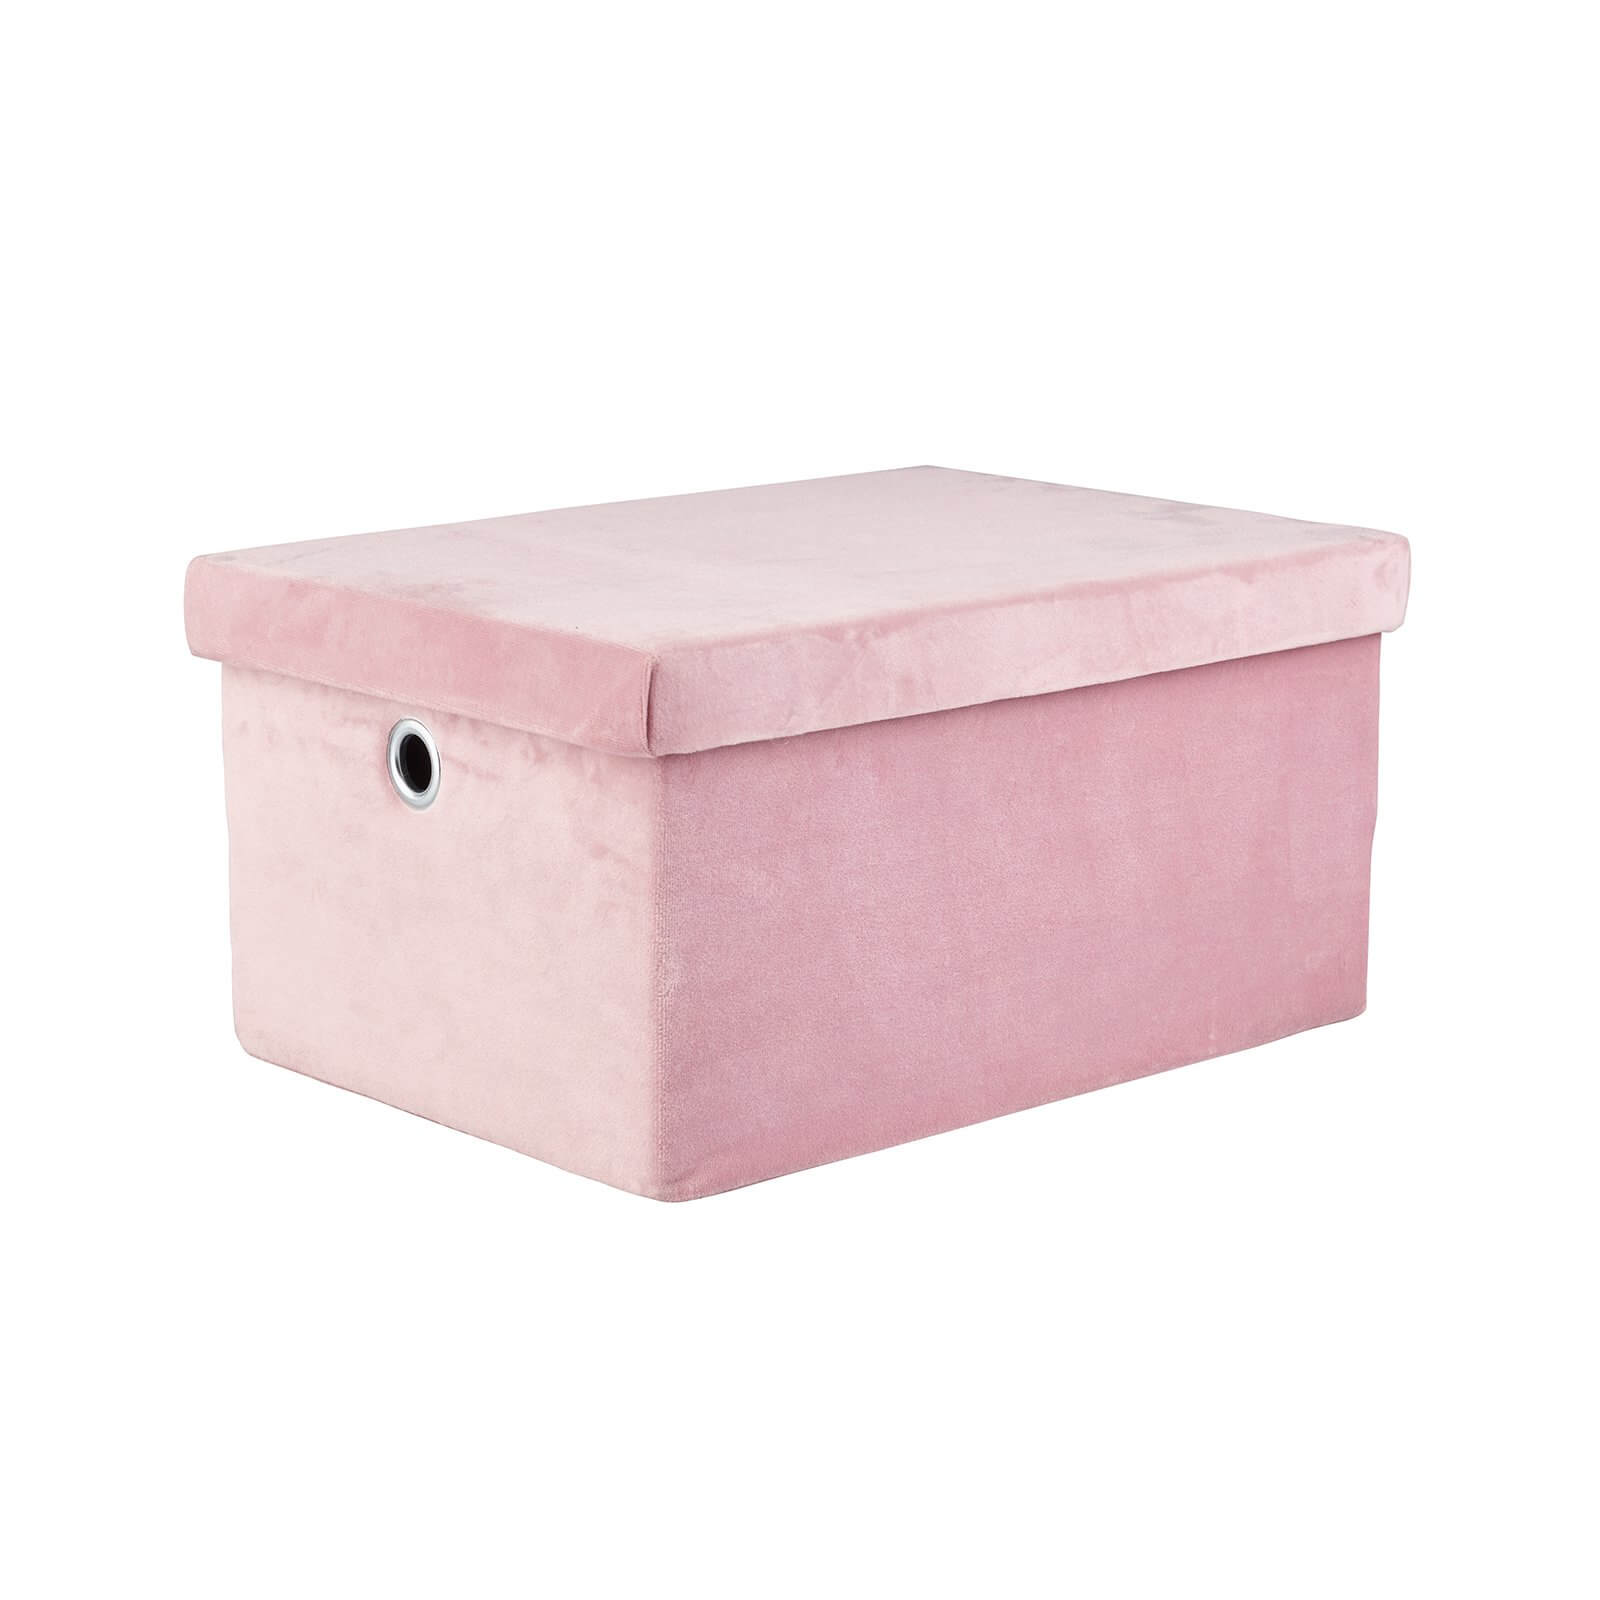 Velvet Storage Boxes - Blush - Set of 3